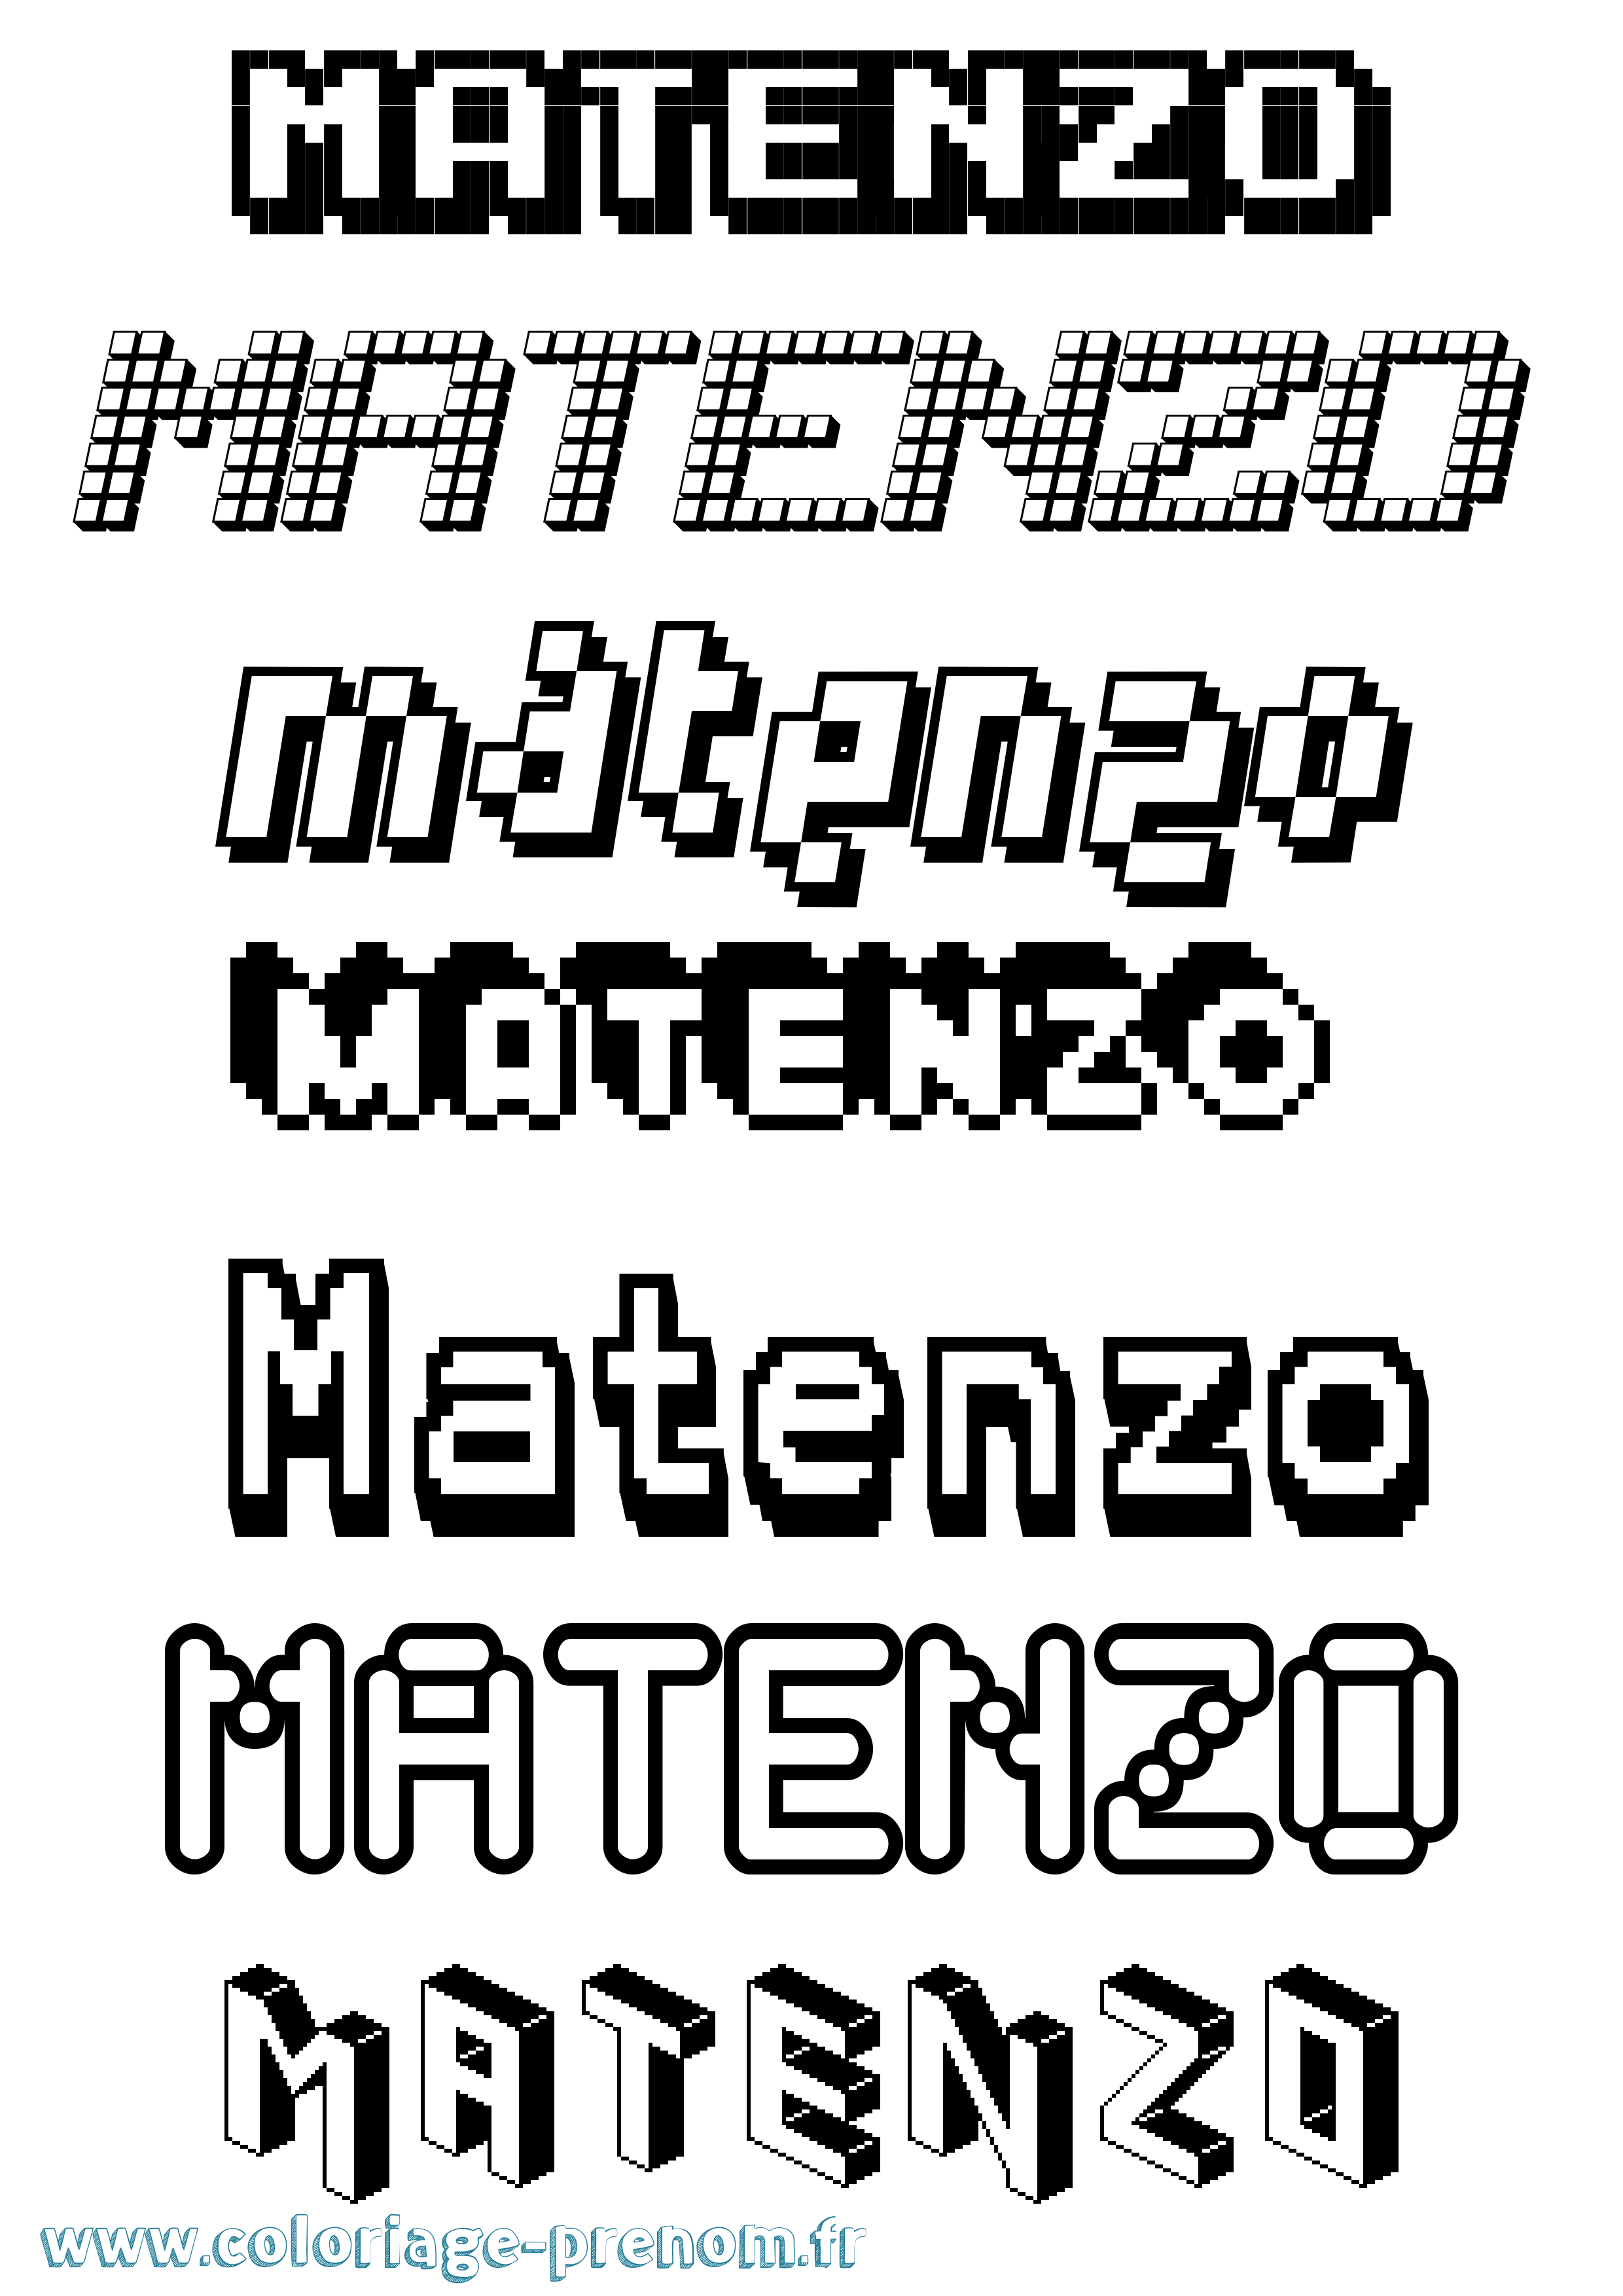 Coloriage prénom Matenzo Pixel